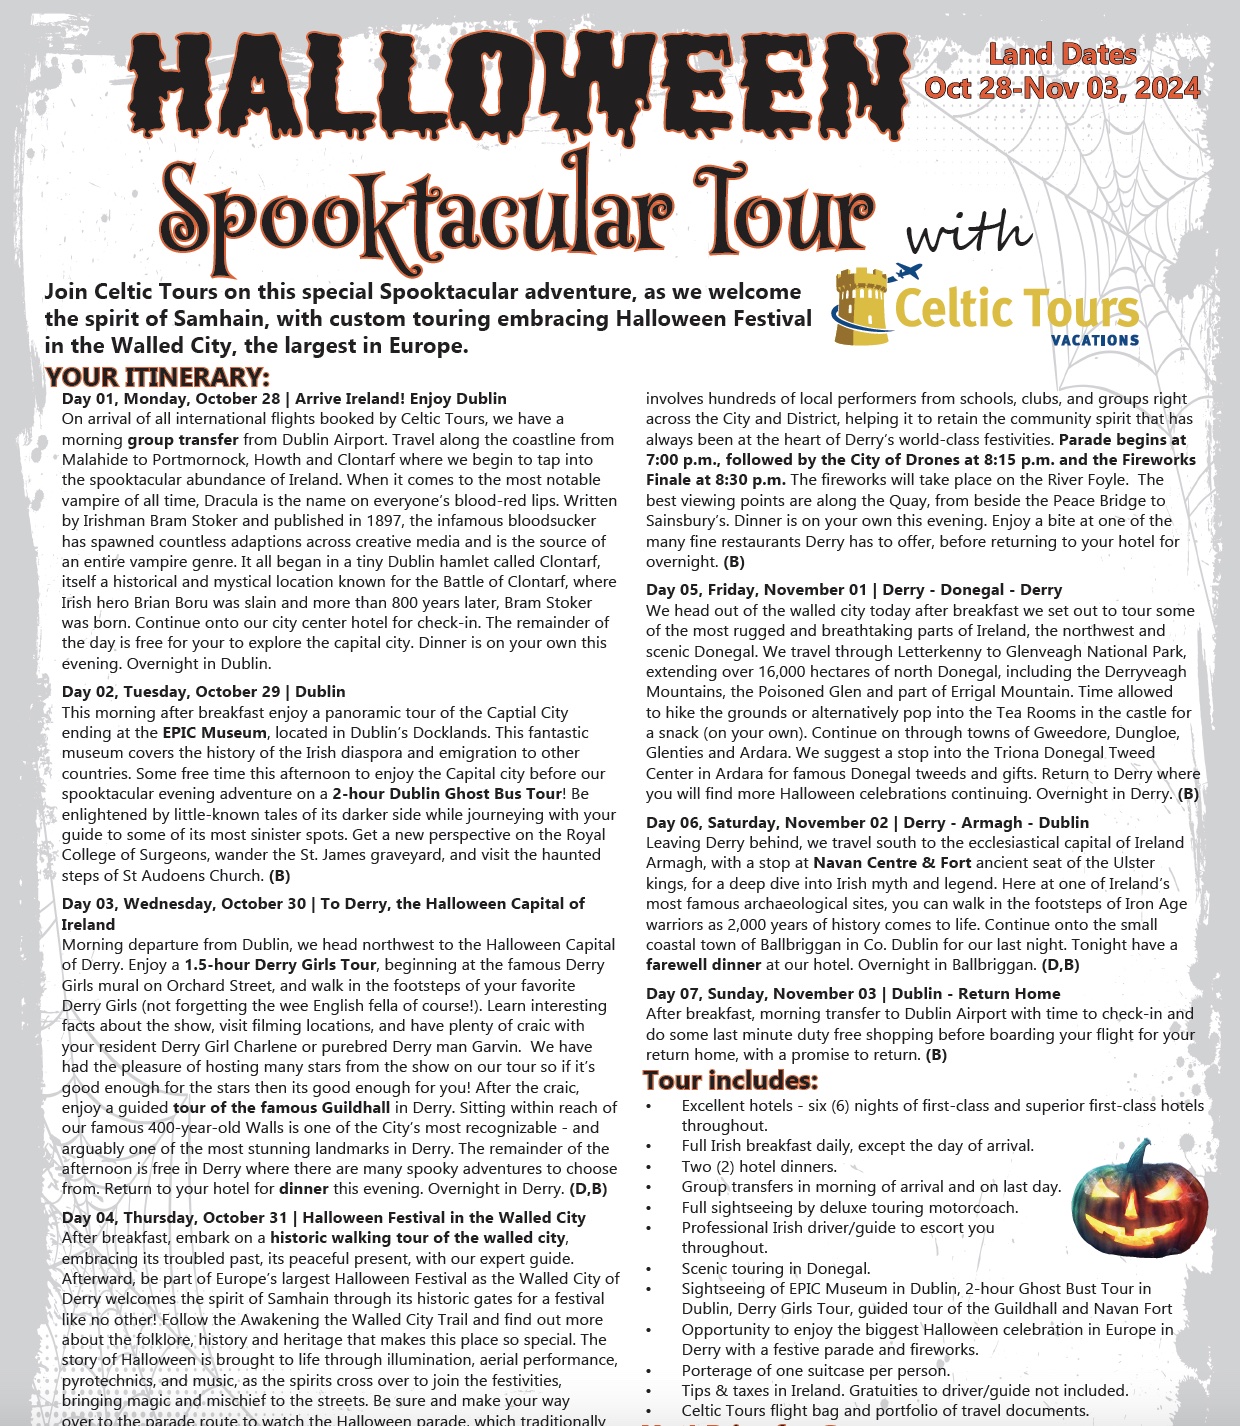 Spend Halloween 2024 on a Spooktacular Tour of Ireland! - Gadabout Travel